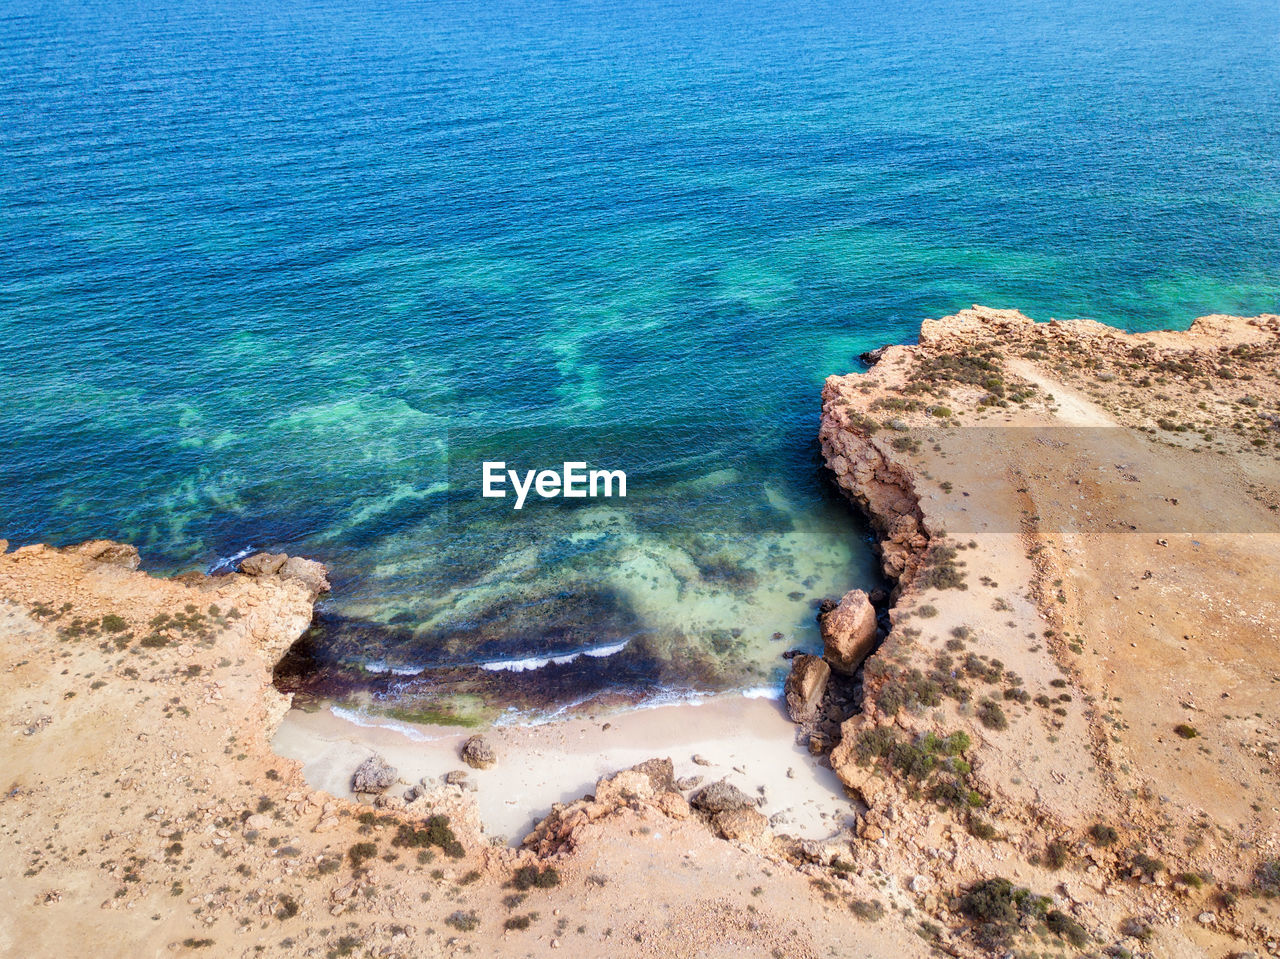 Blue water bay between rocks, oman taken in 2015